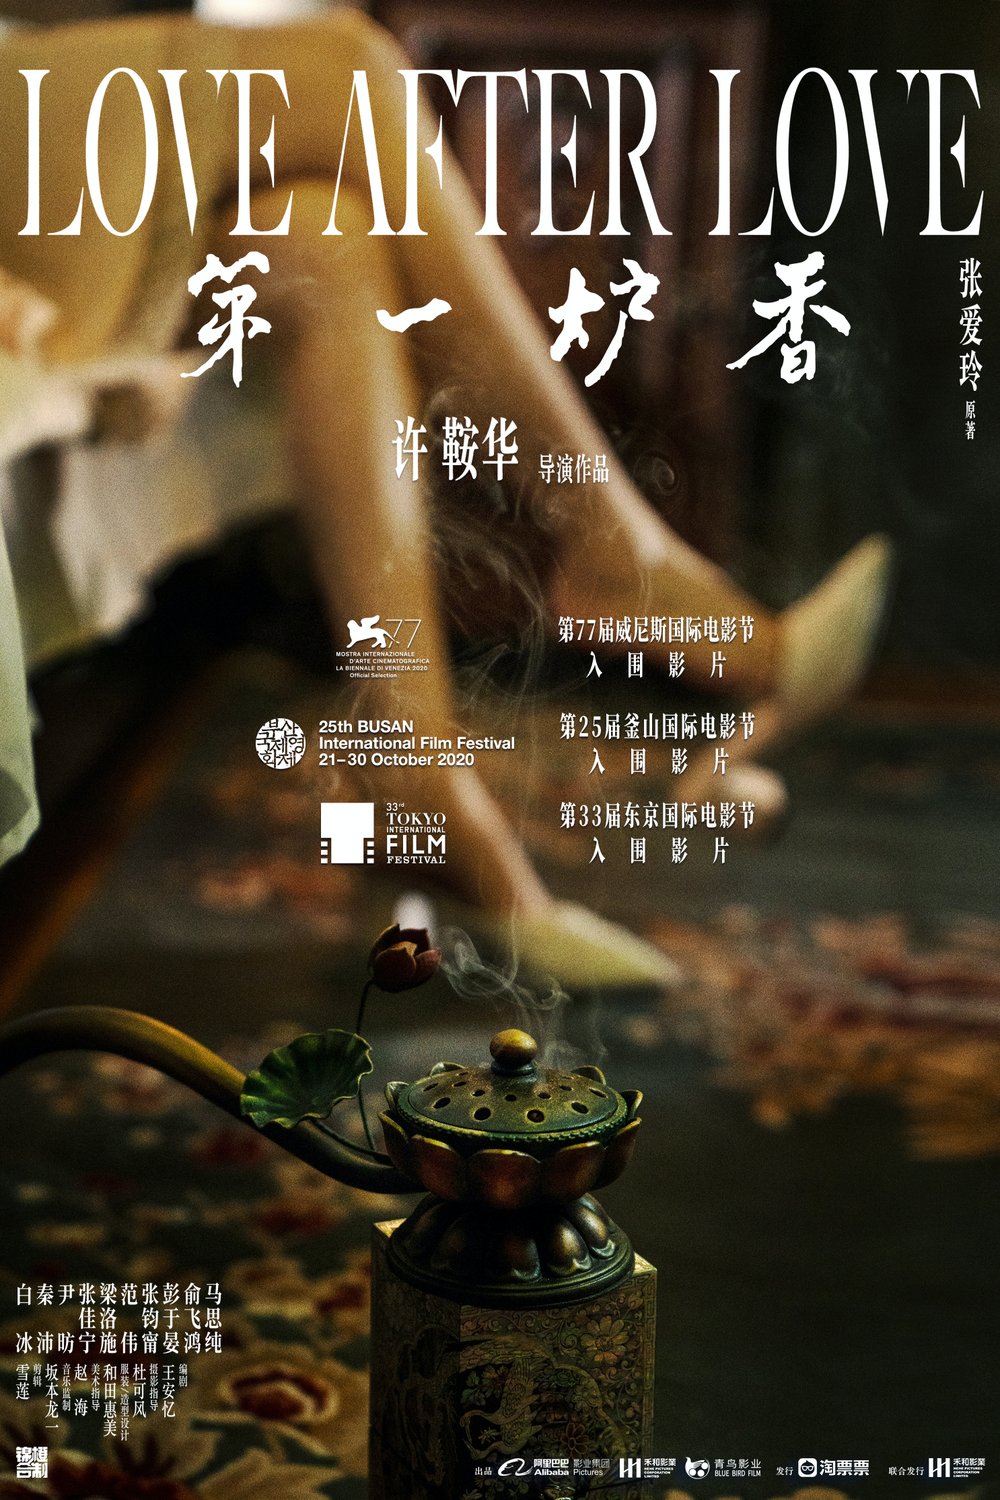 L'affiche originale du film Di yi lu xiang en mandarin